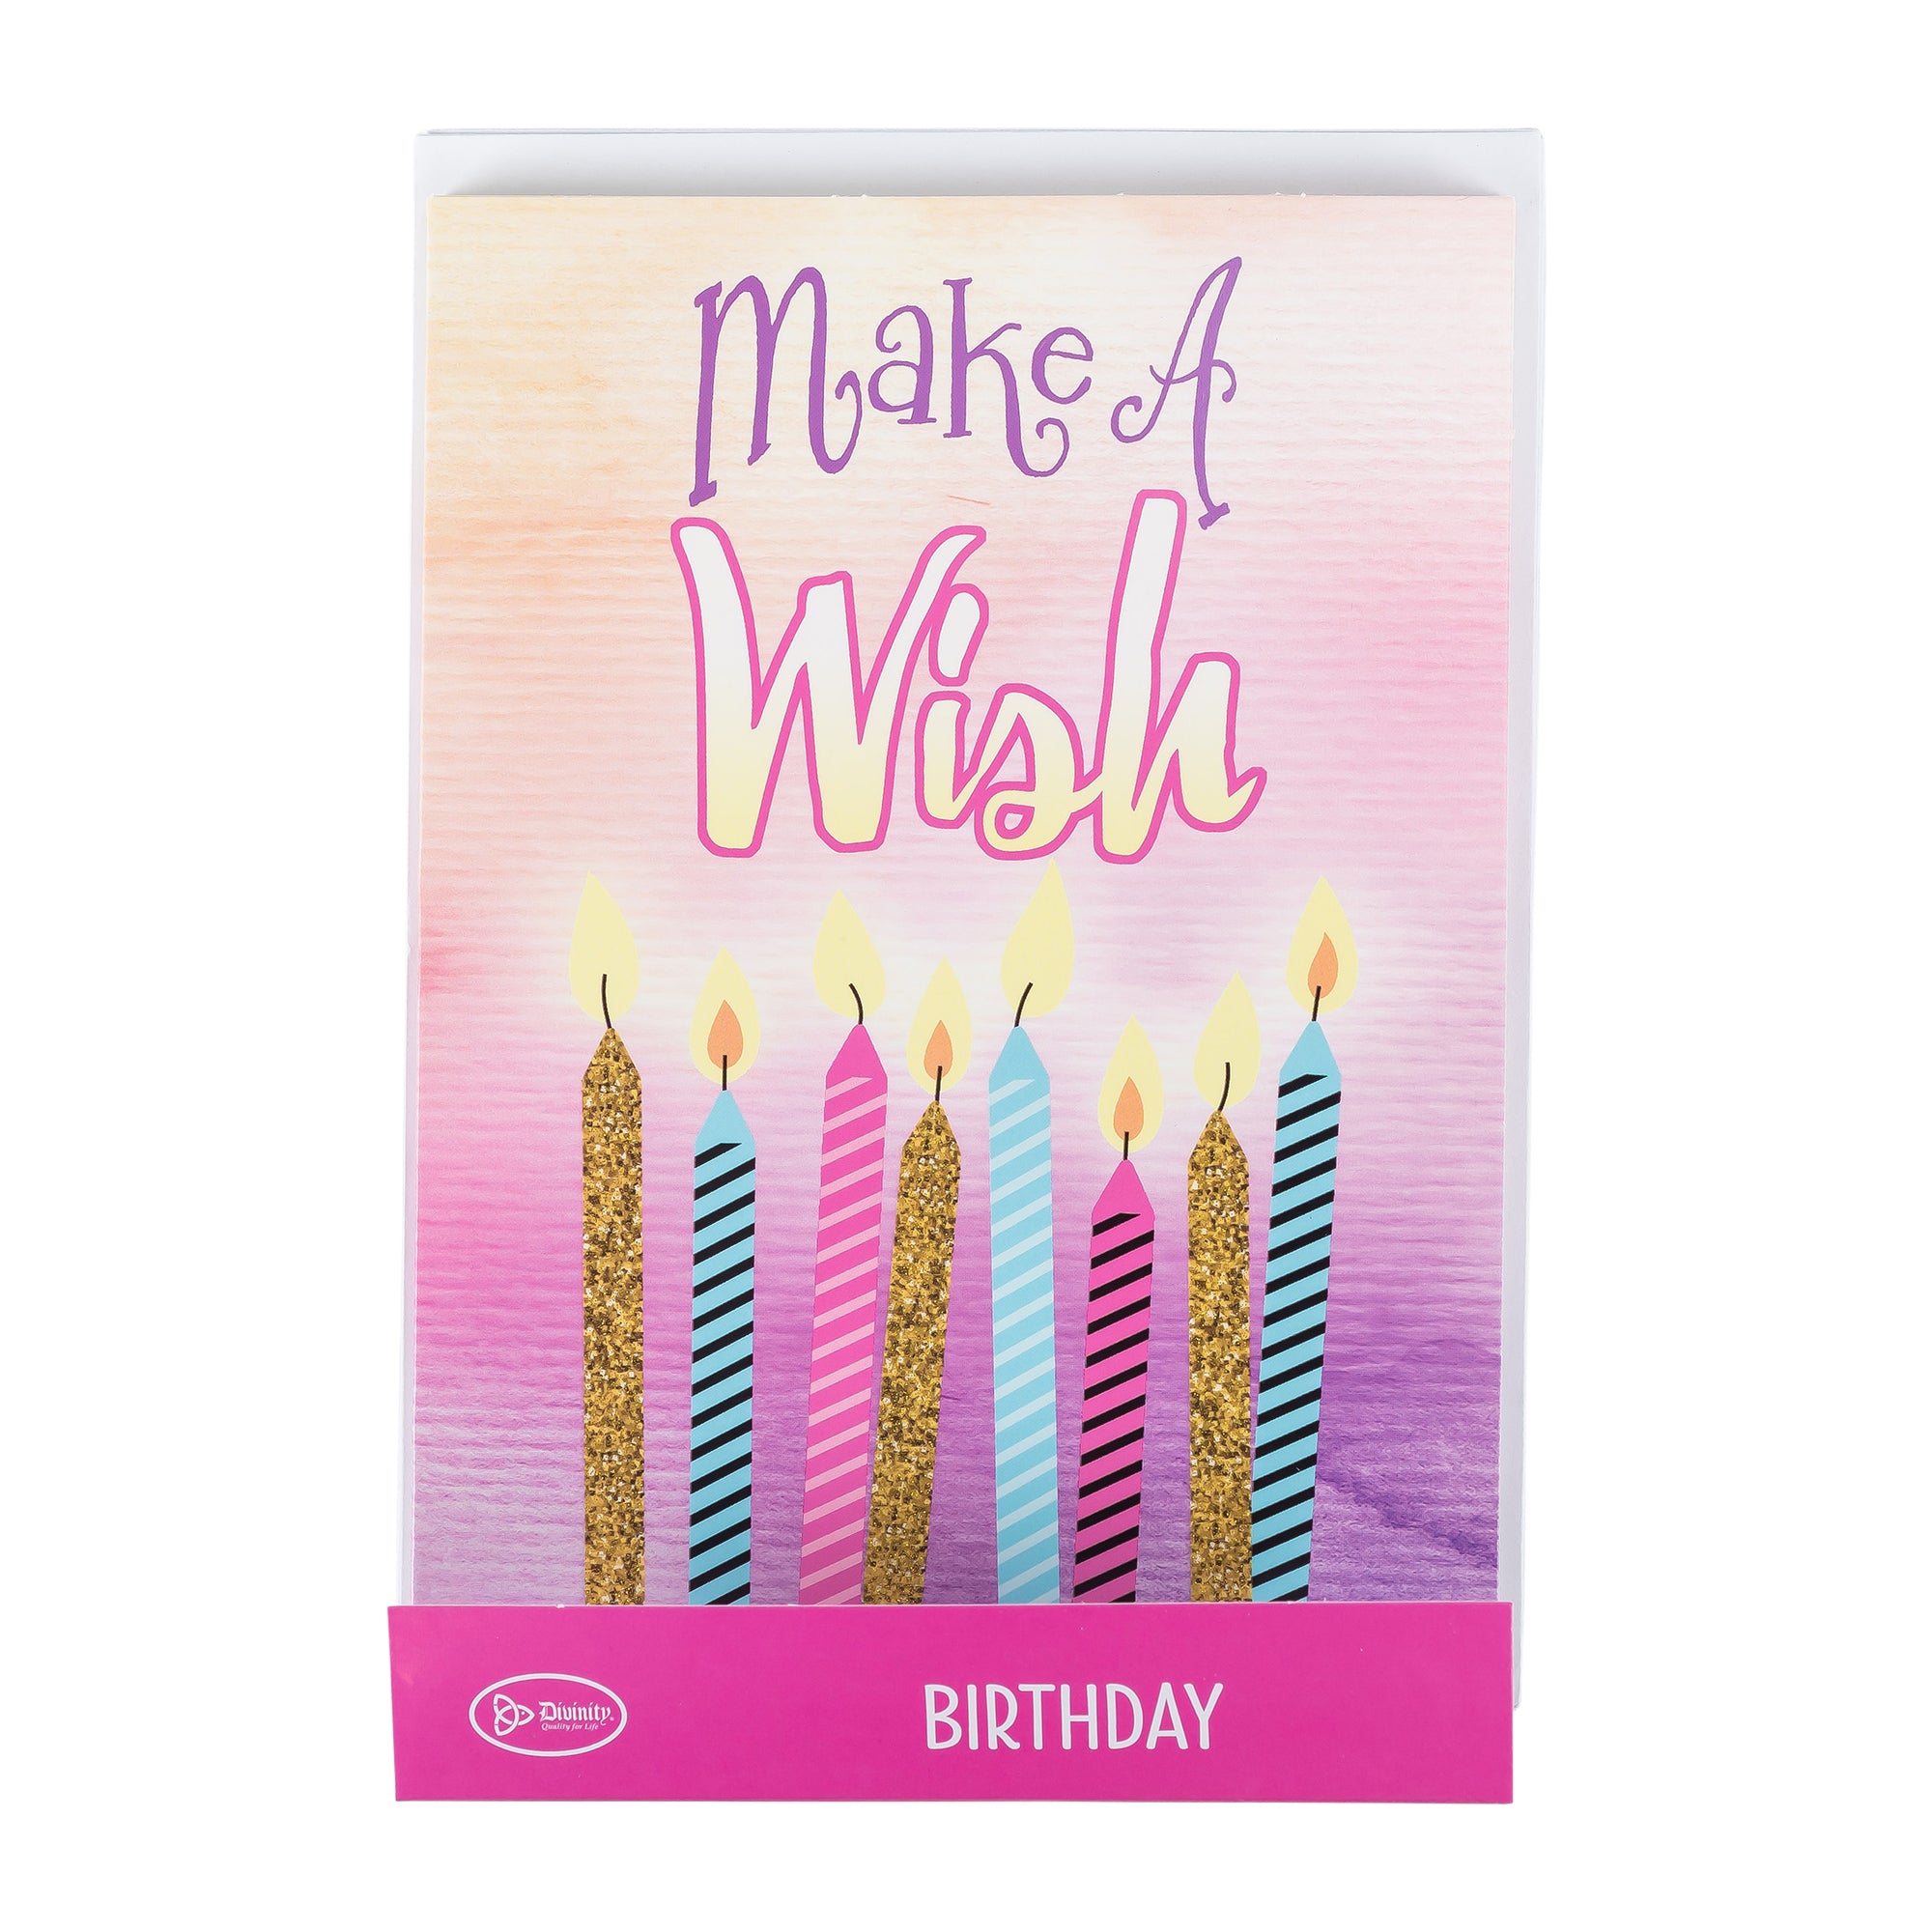 Single Cards: Birthday, Make a Wish (Set of 6)